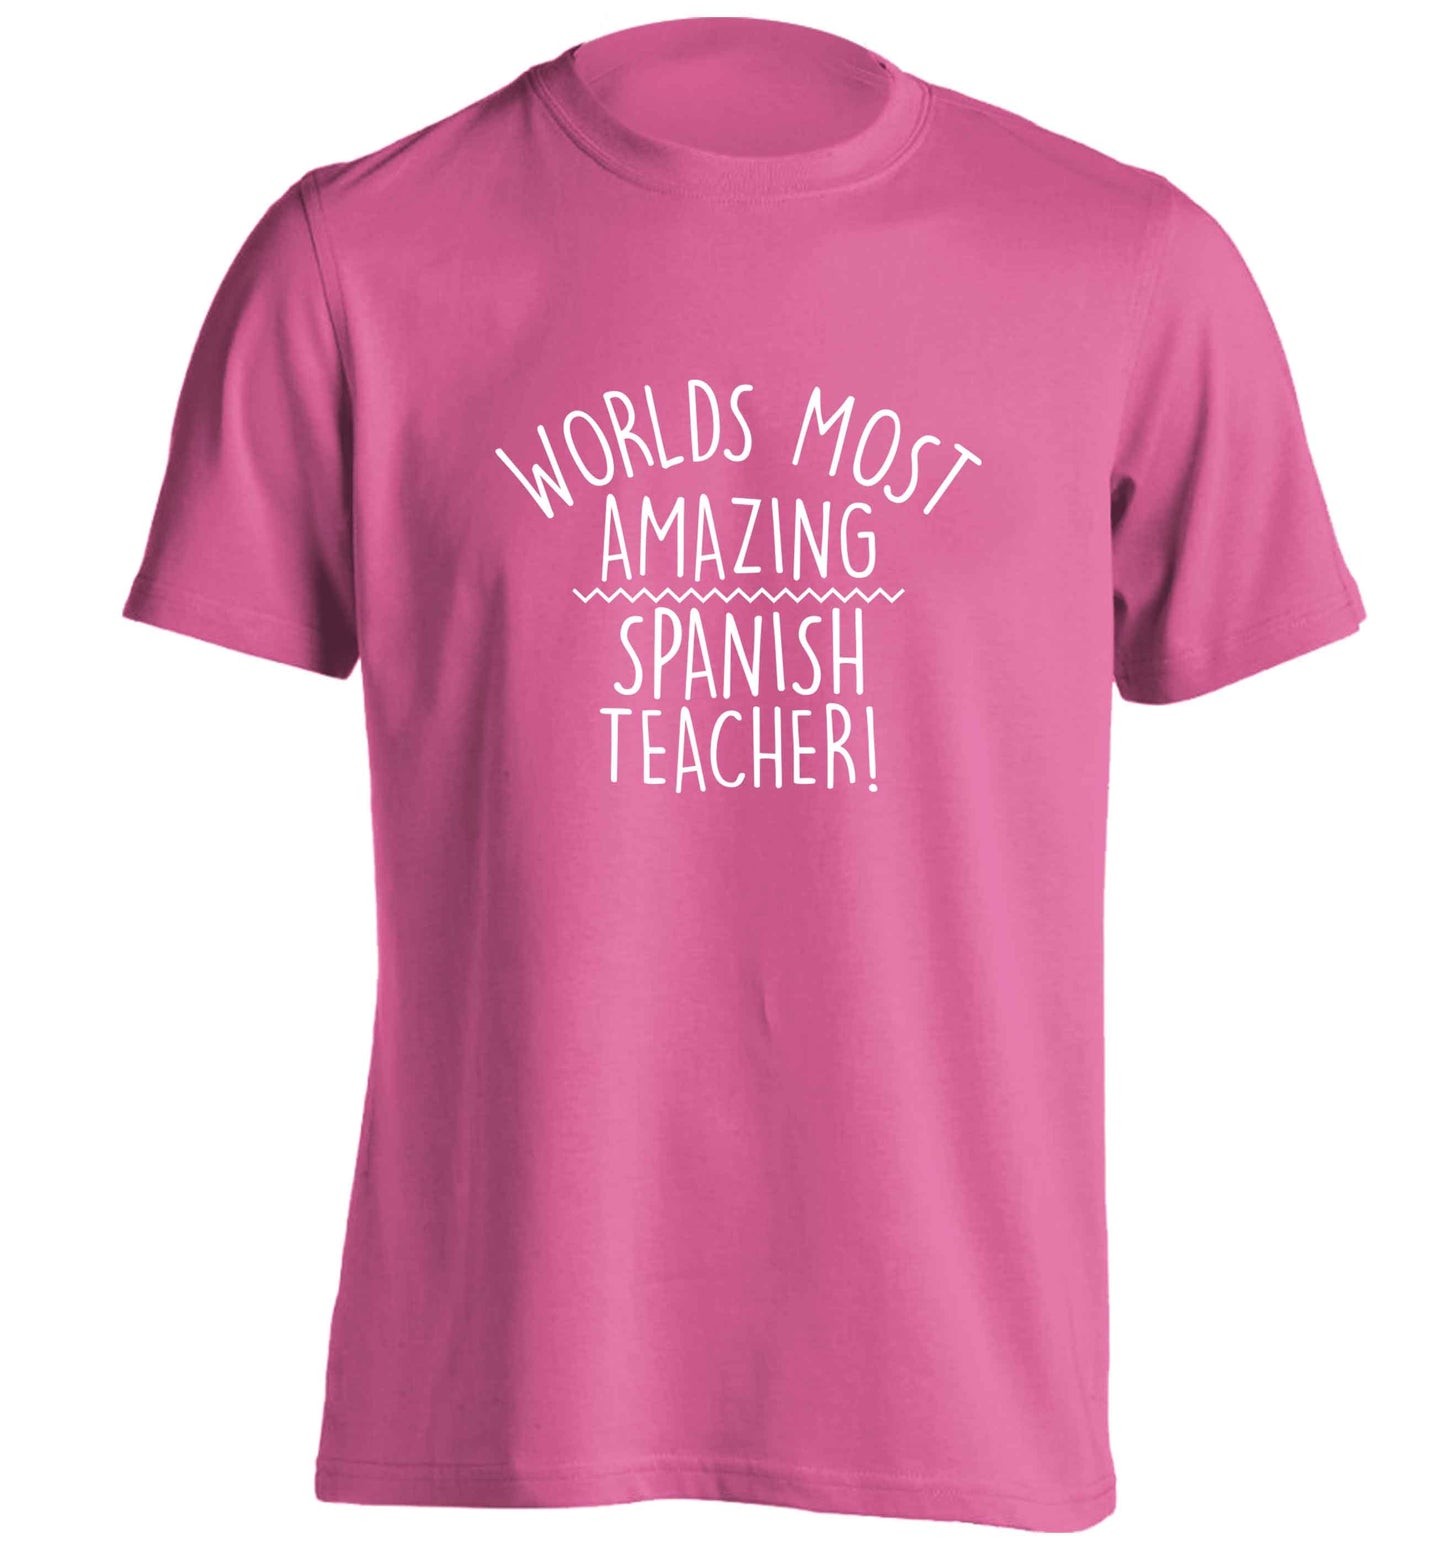 Worlds most amazing Spanish teacher adults unisex pink Tshirt 2XL